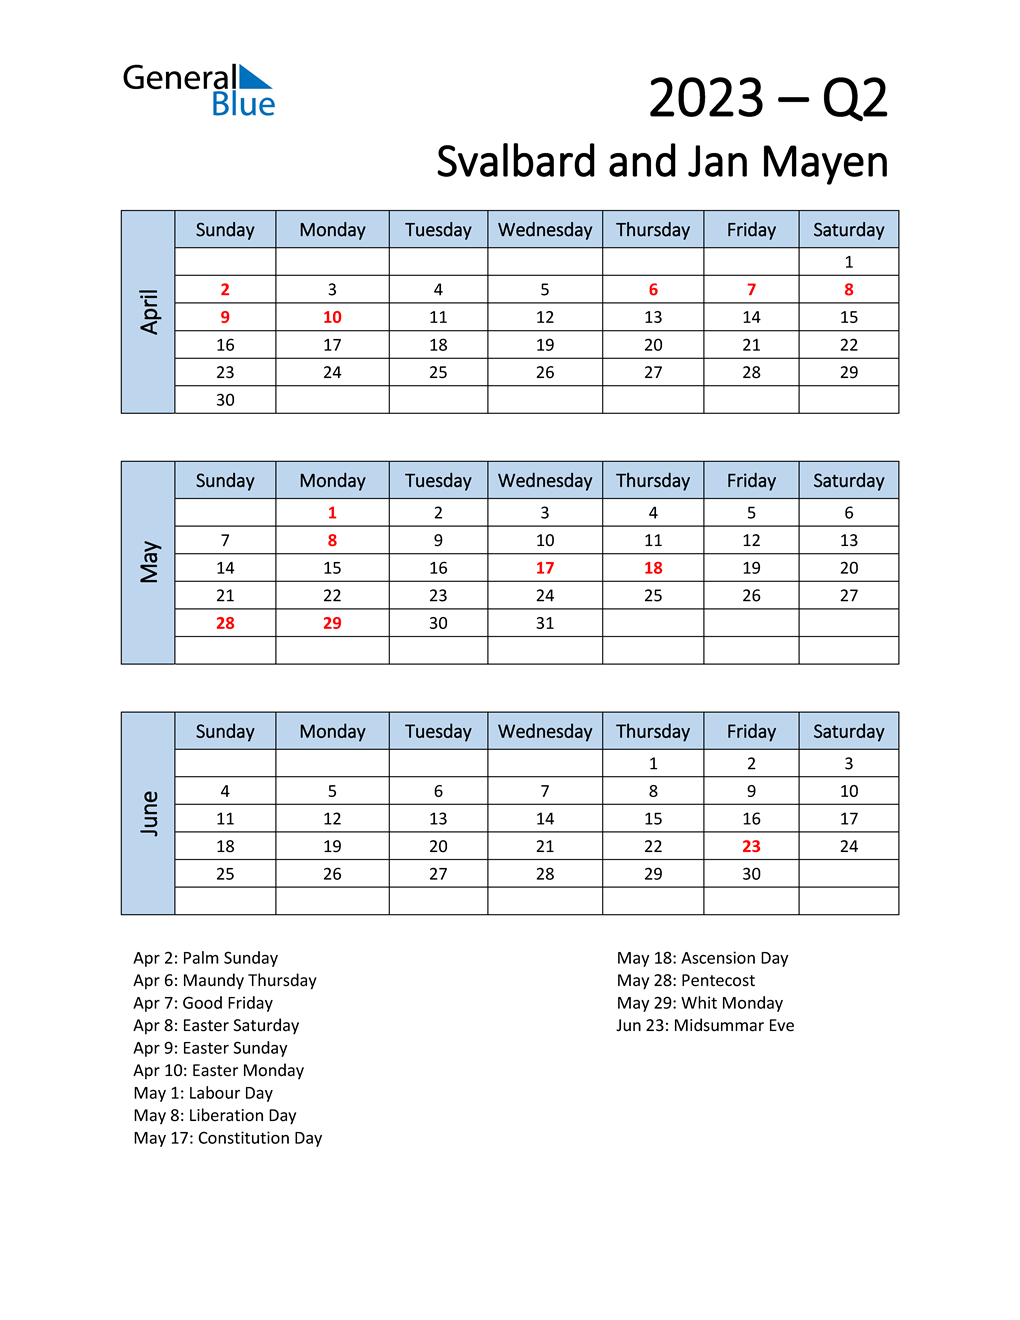  Free Q2 2023 Calendar for Svalbard and Jan Mayen